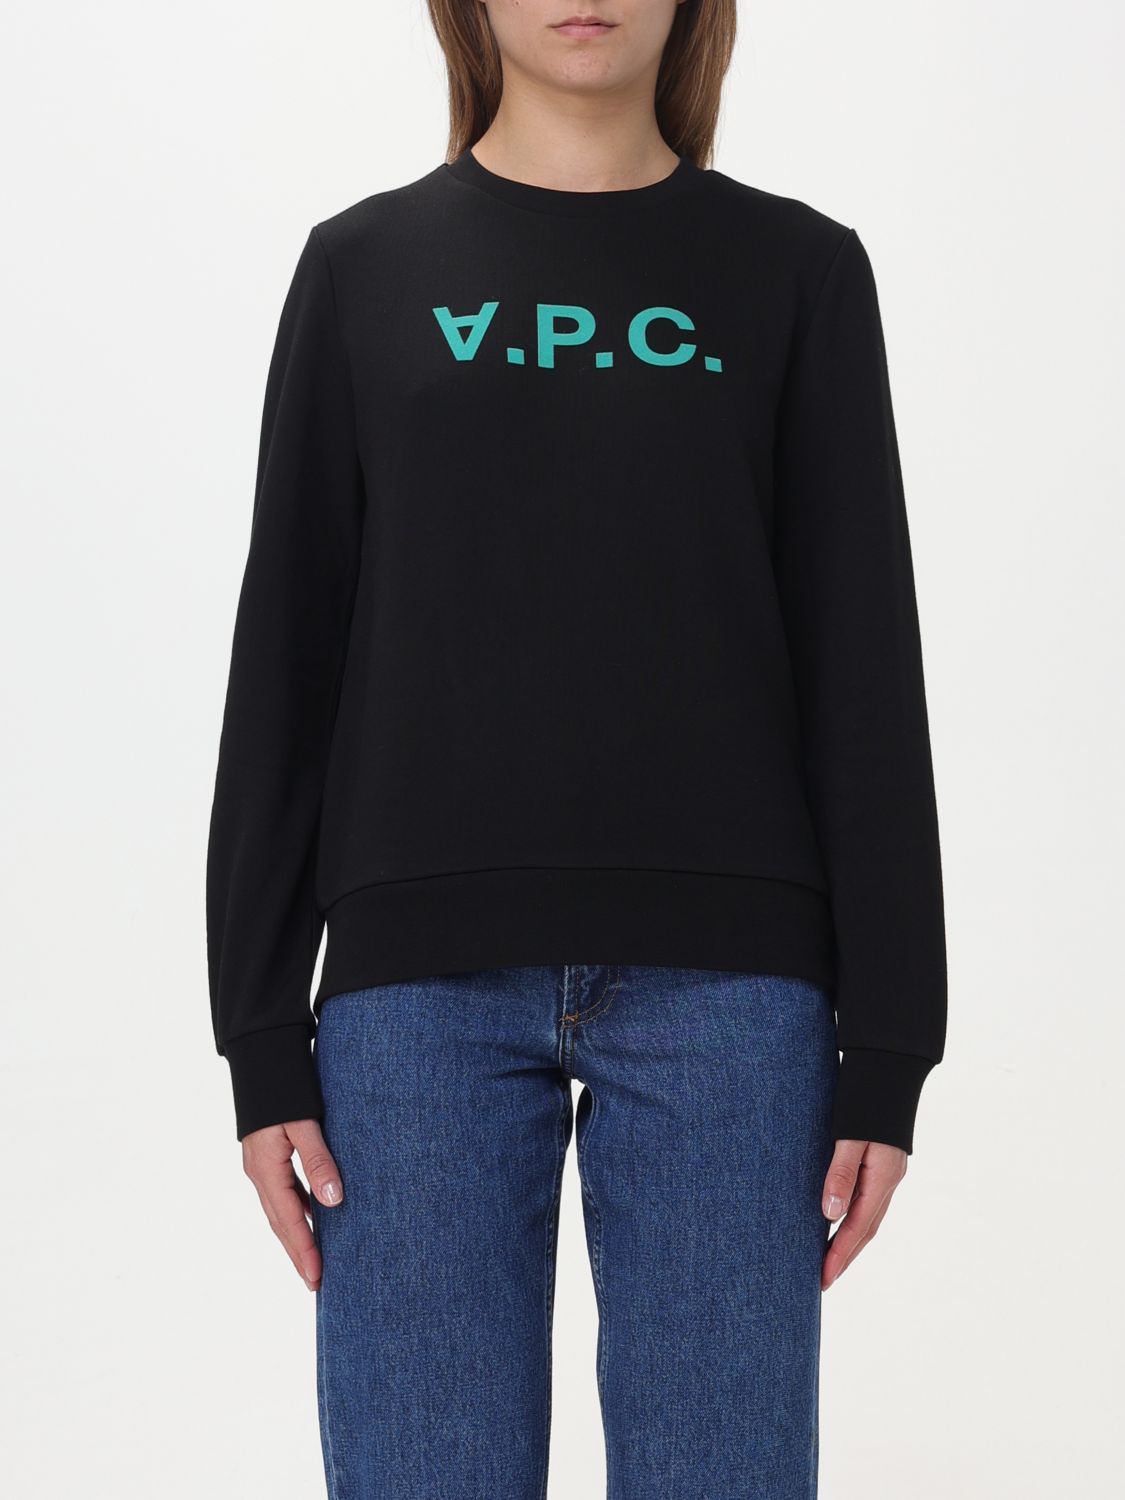 Shop Apc Sweatshirt A.p.c. Woman Color Black 1